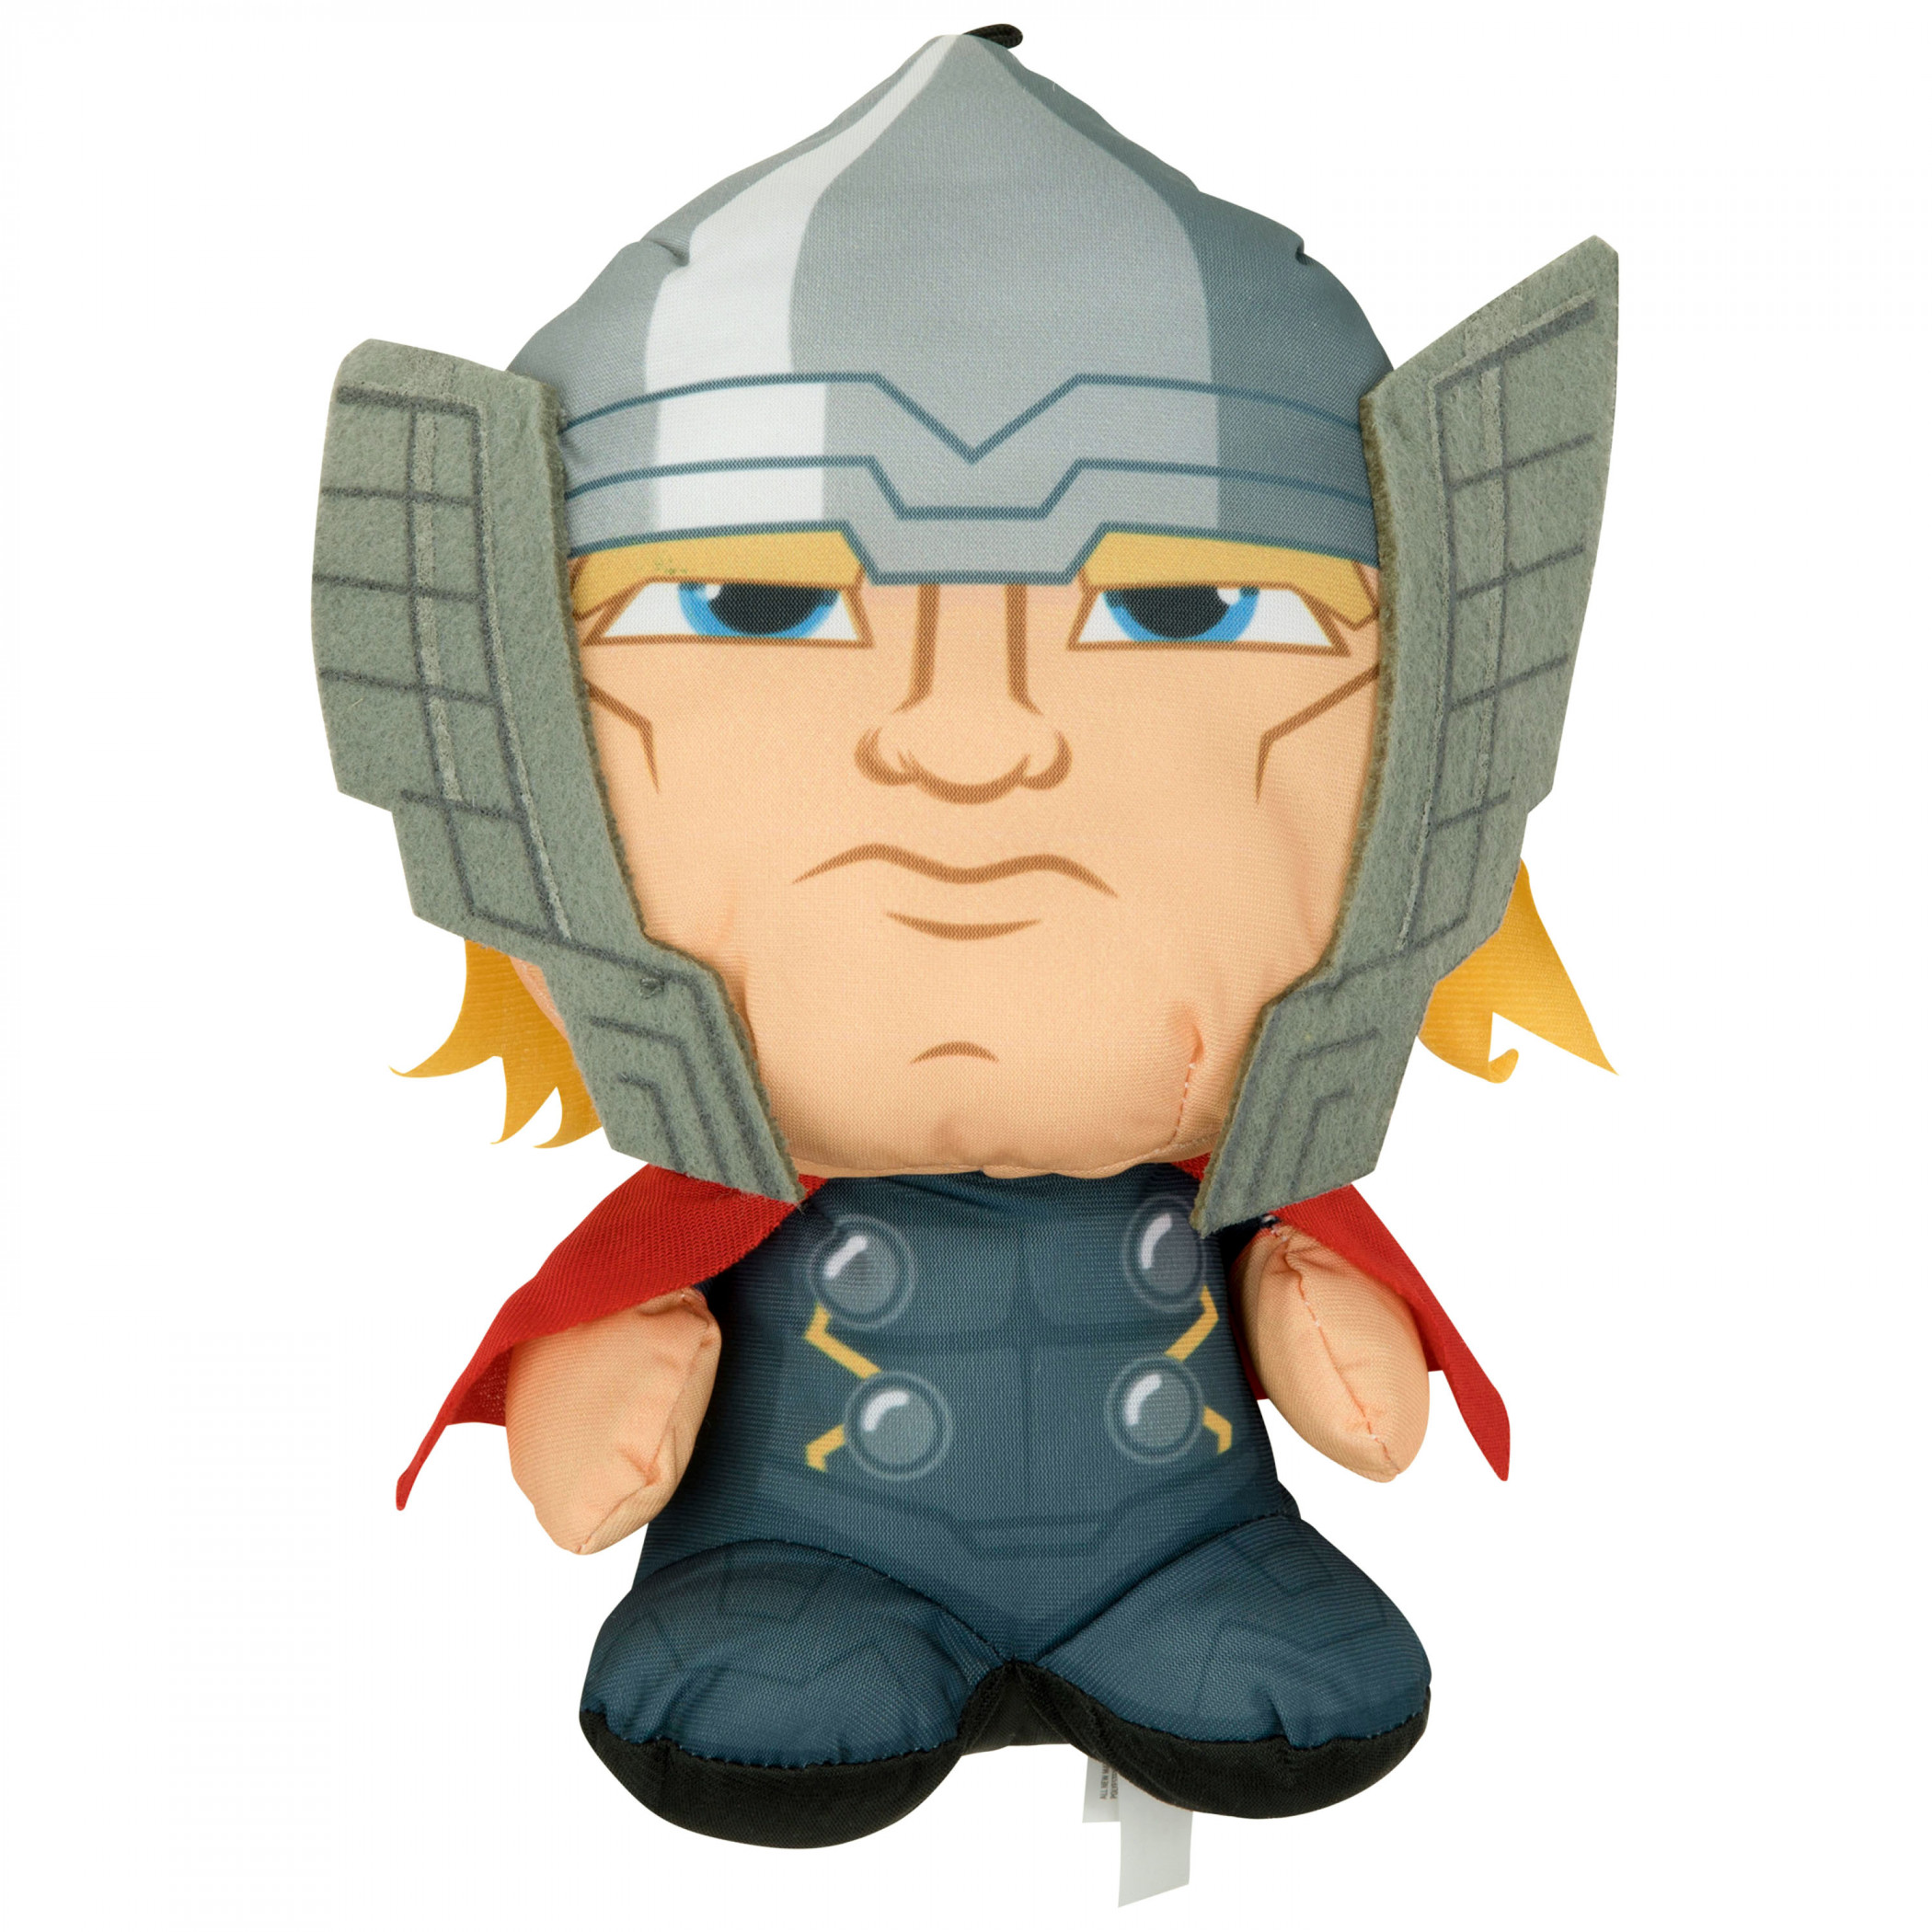 Thor 11" Mash'ems Plush Toy